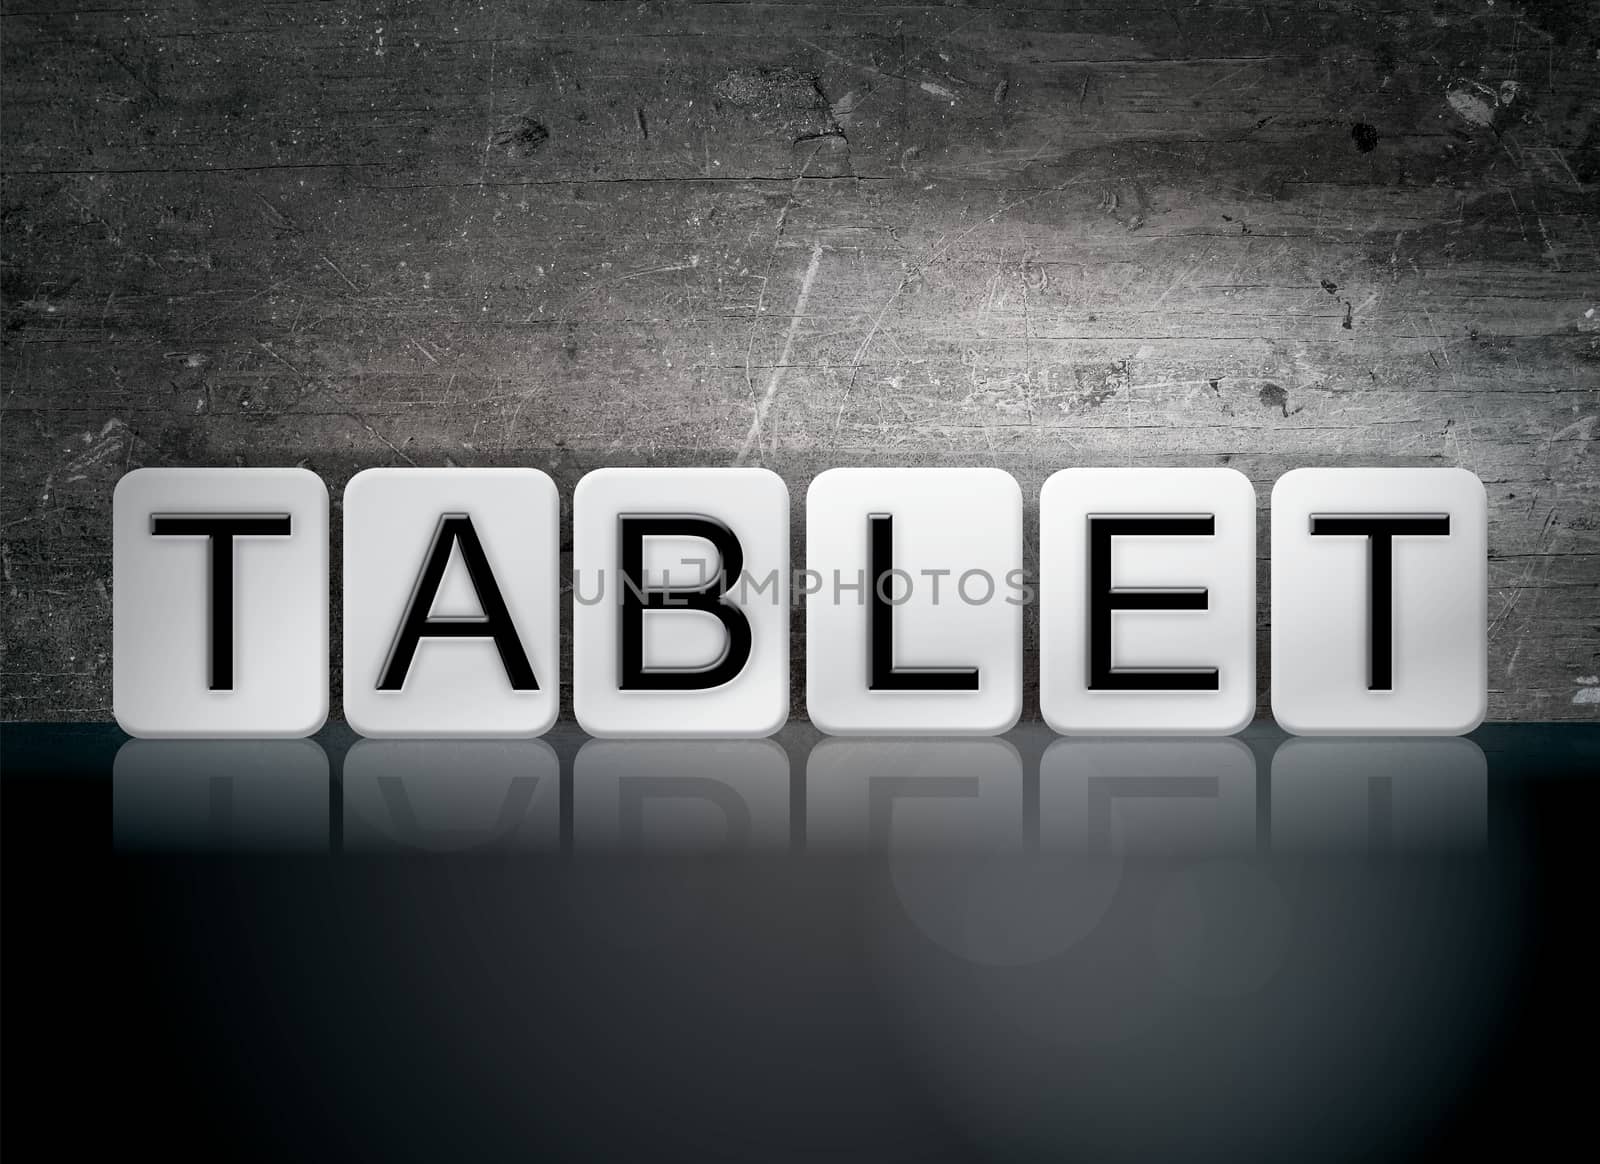 The word "Tablet" written in white tiles against a dark vintage grunge background.